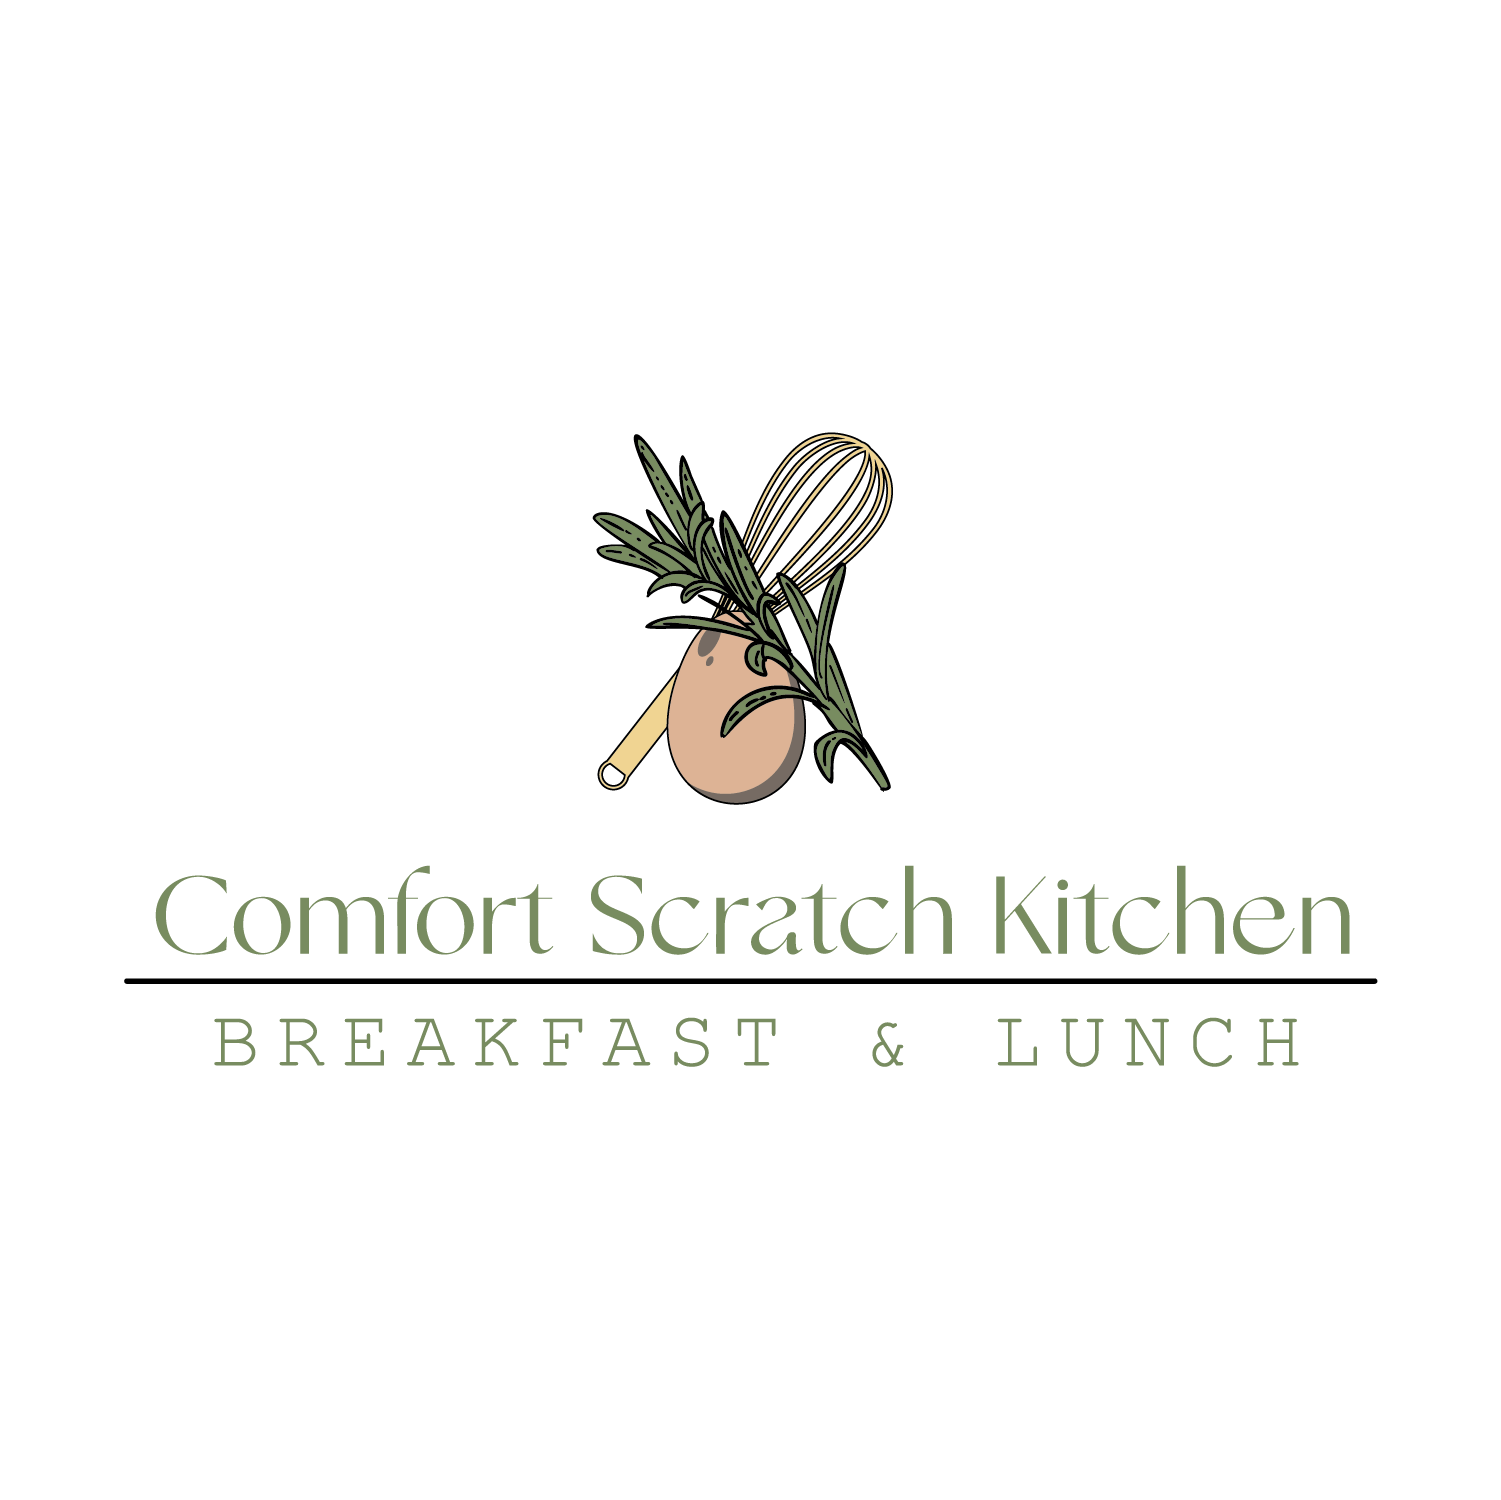 Comfort Scratch Kitchen 407 N. Lake Dr